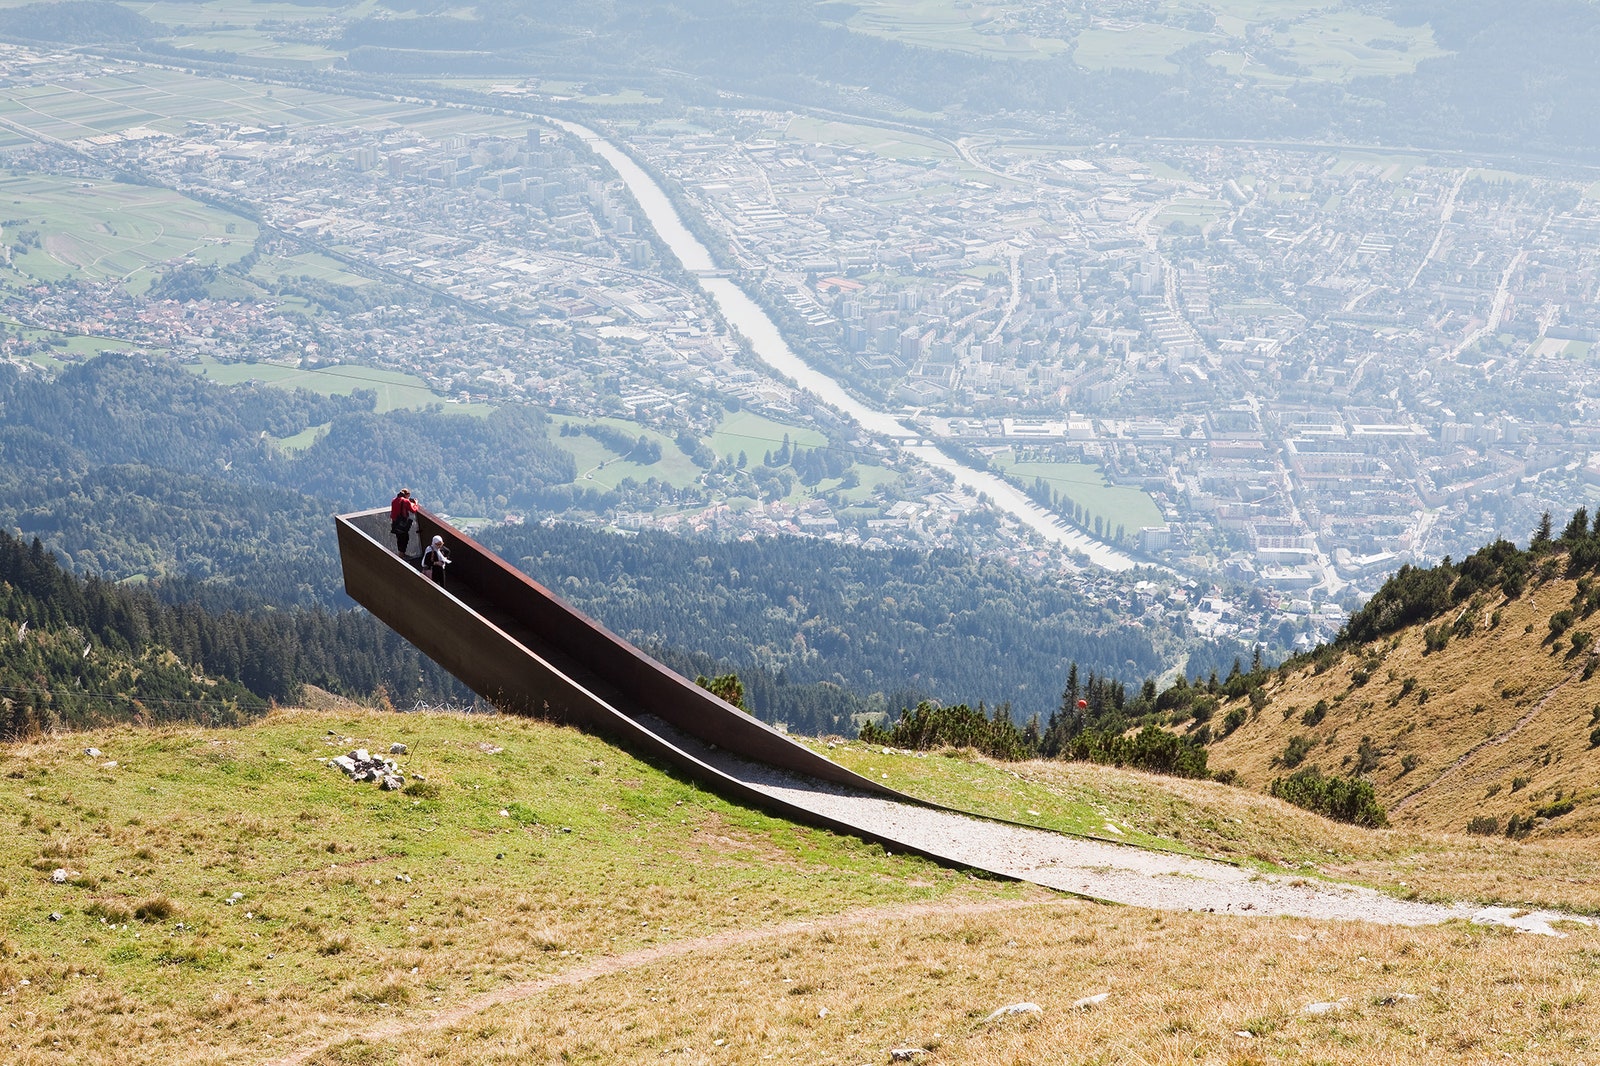 “Архитектурная” горная тропа в Австрии от бюро Snøhetta